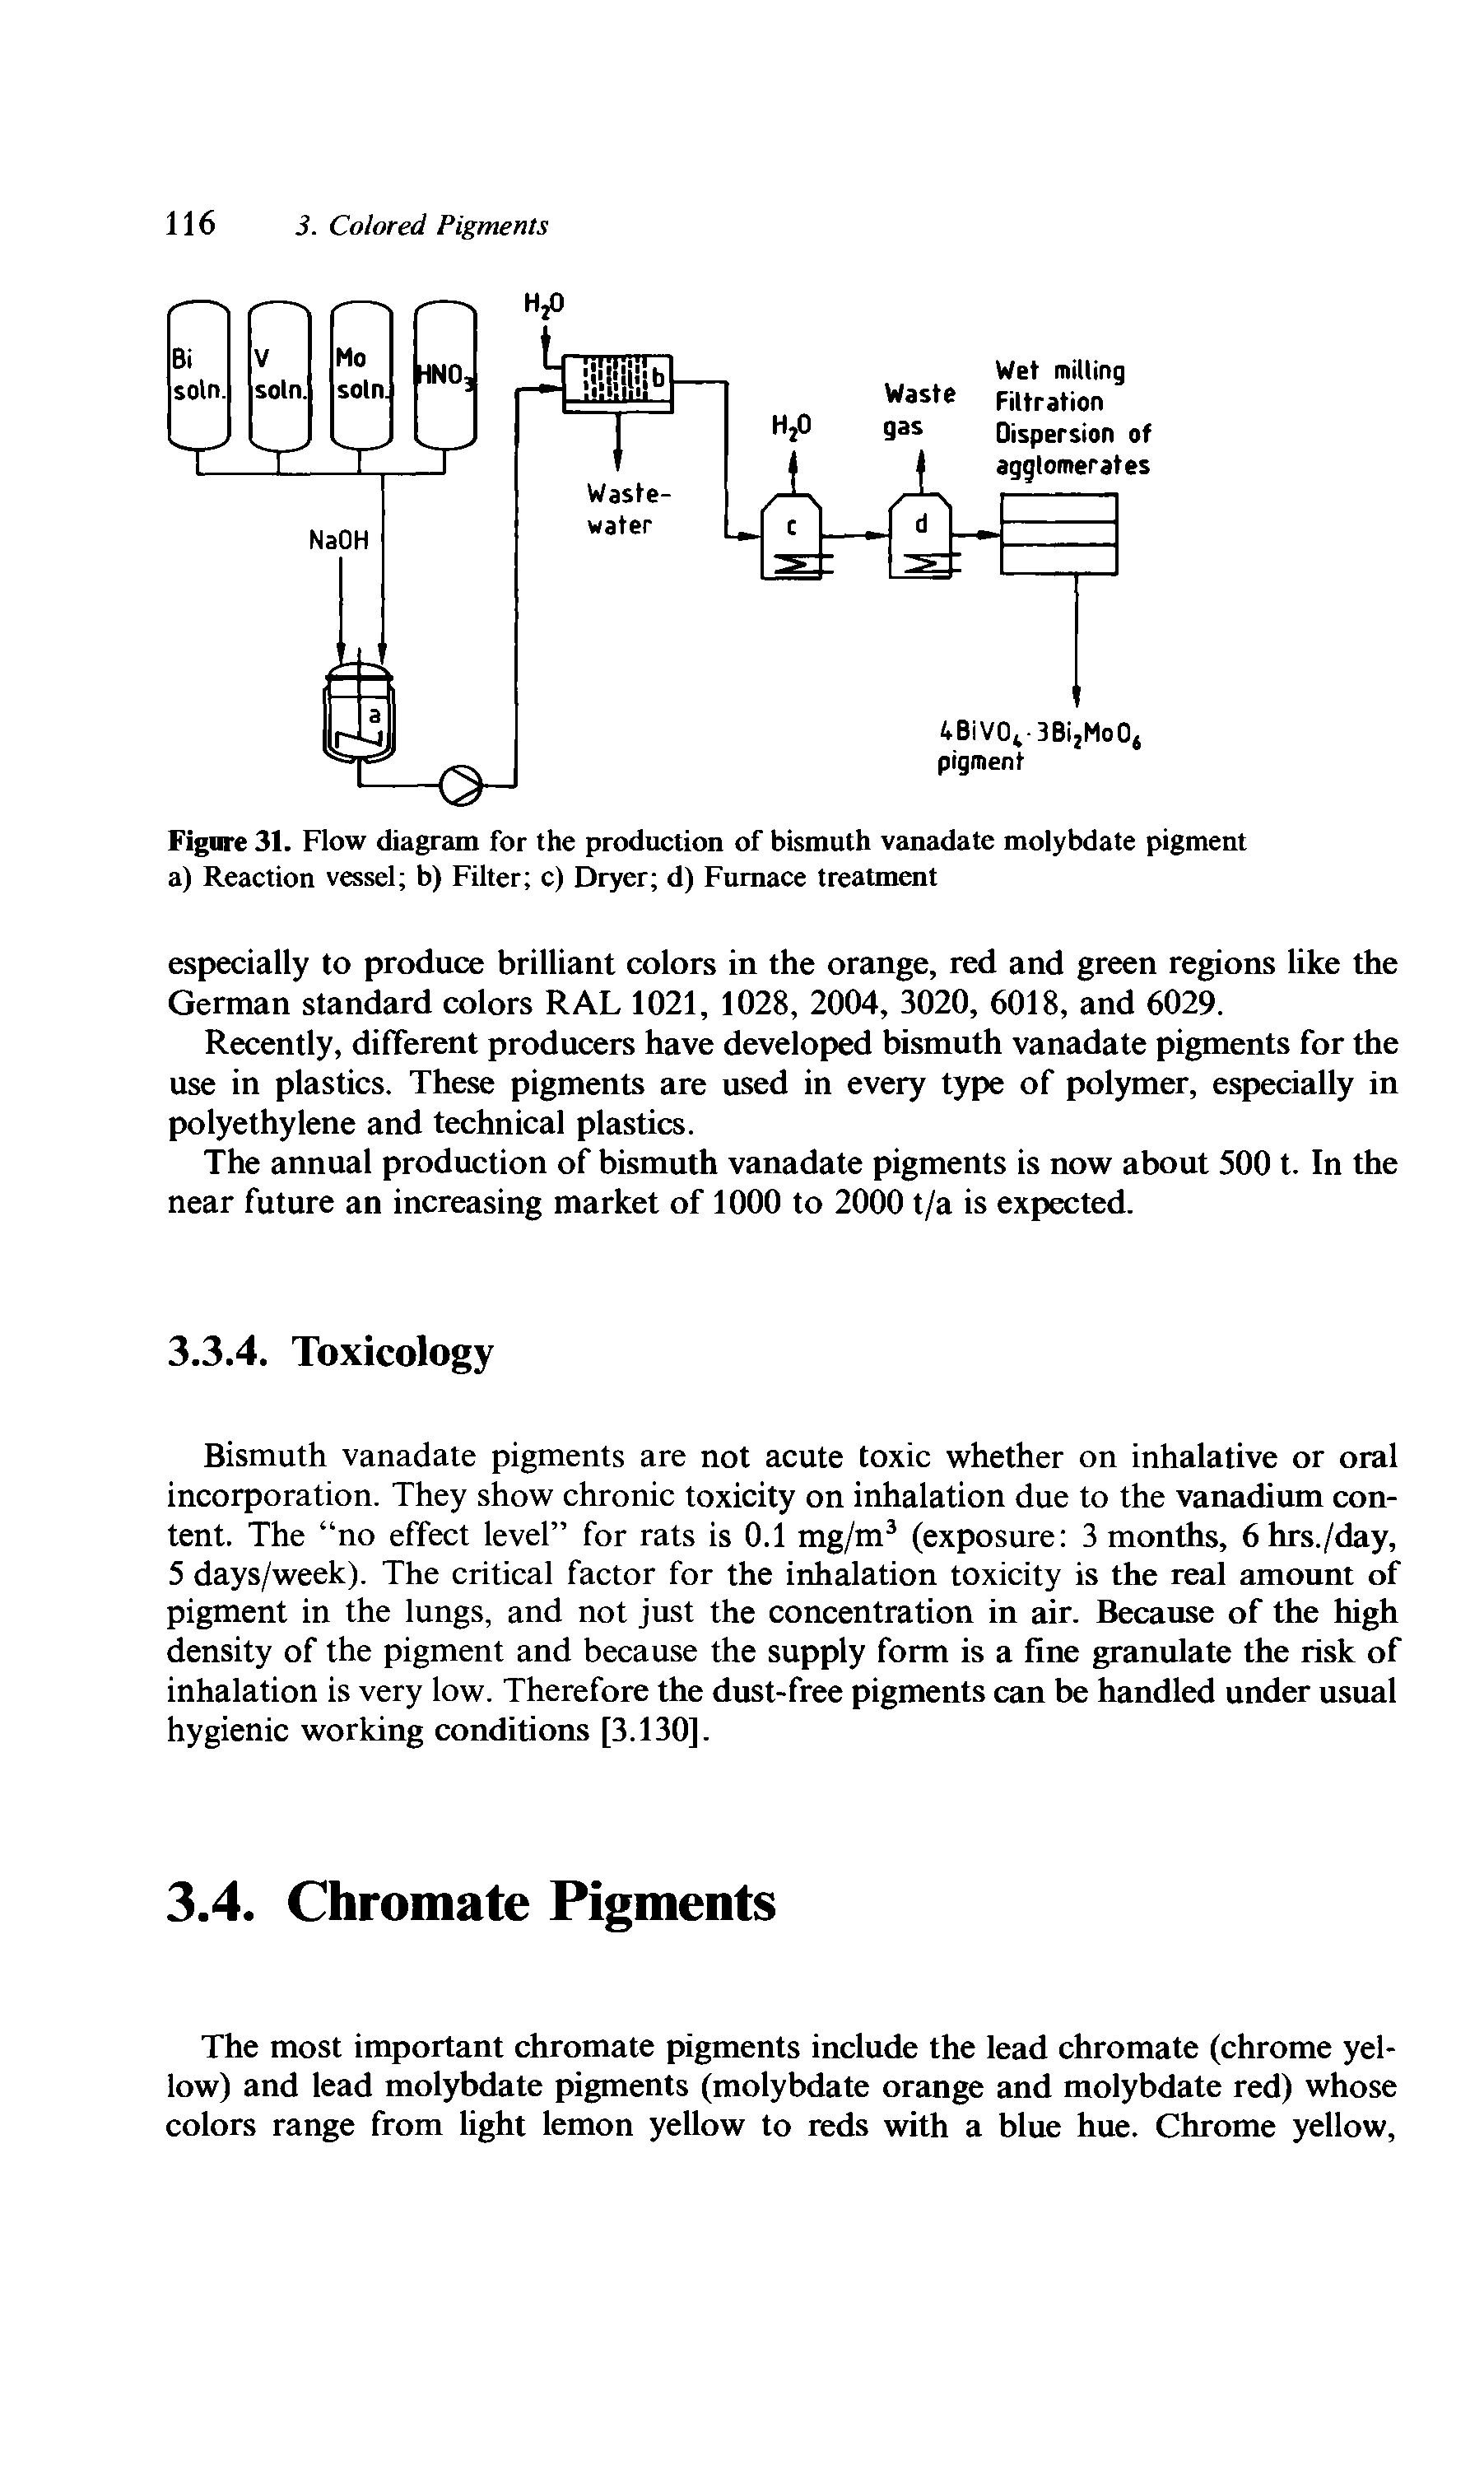 Figure 31. Flow diagram for the production of bismuth vanadate molybdate pigment a) Reaction vessel b) Filter c) Dryer d) Furnace treatment...